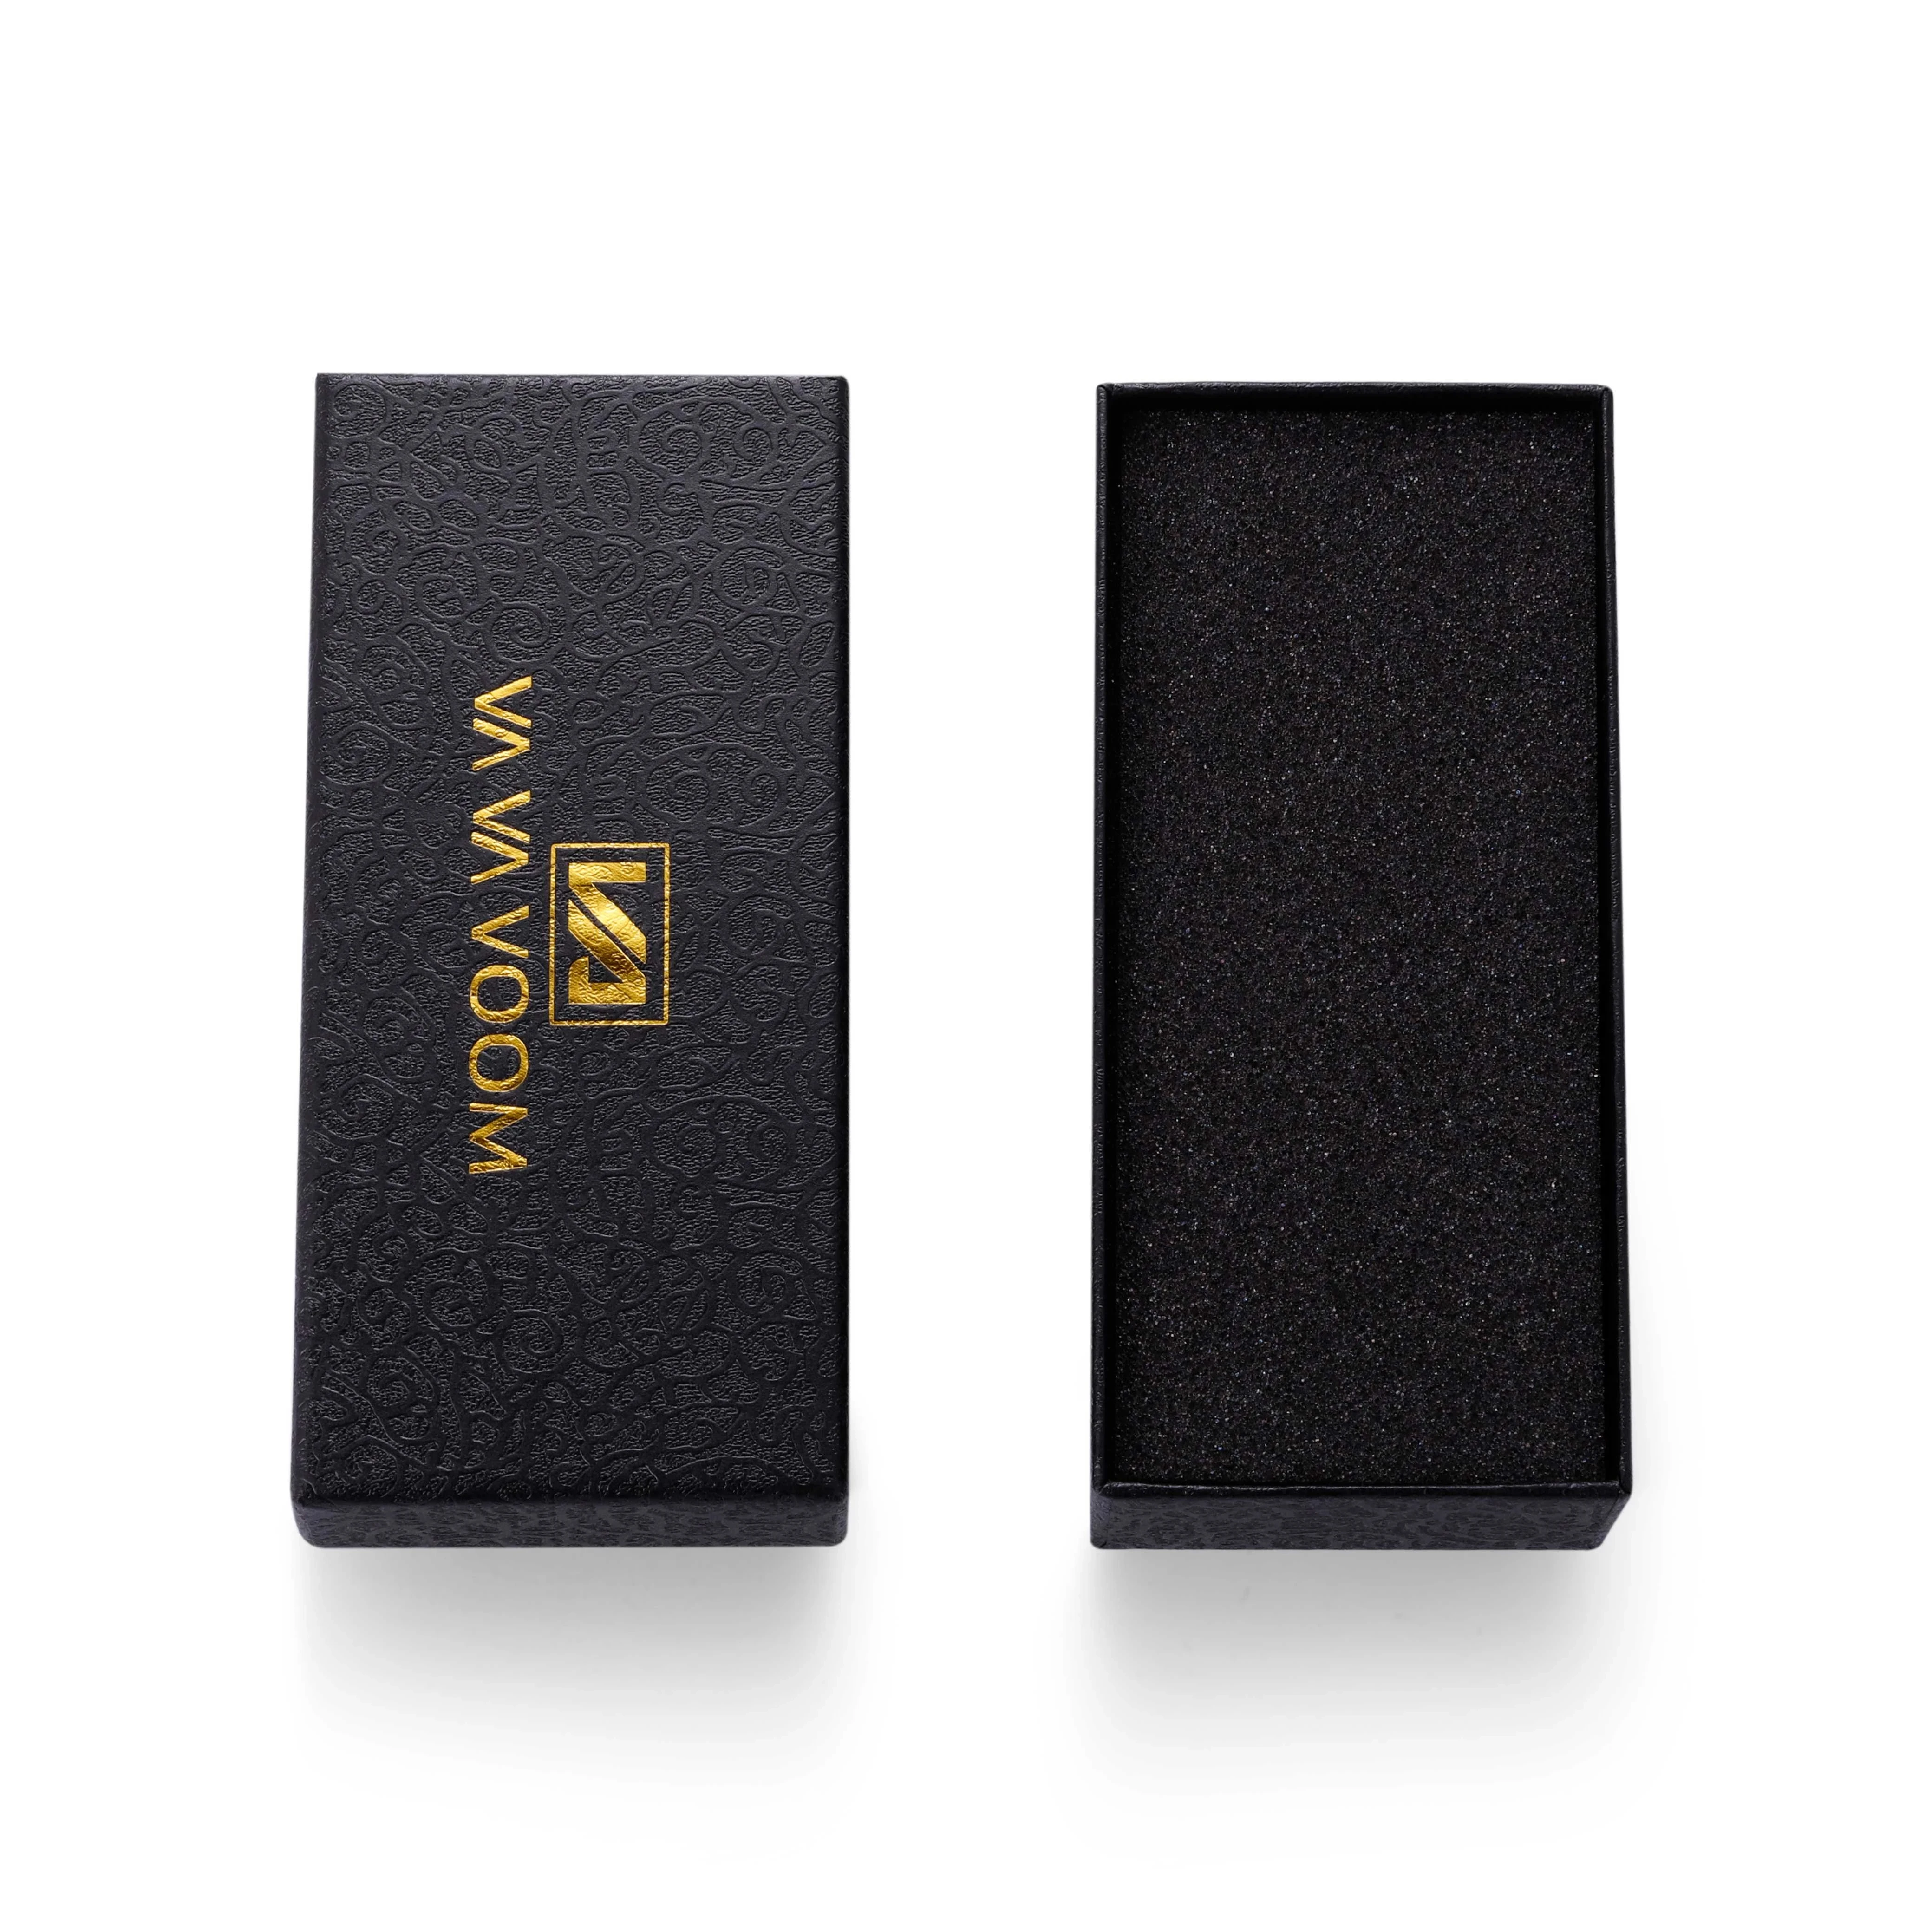 

VA VA VOOM Black Gold Box Original Hard Paper Case Carton Package Vava Voom Gift Watches Boxes for Men